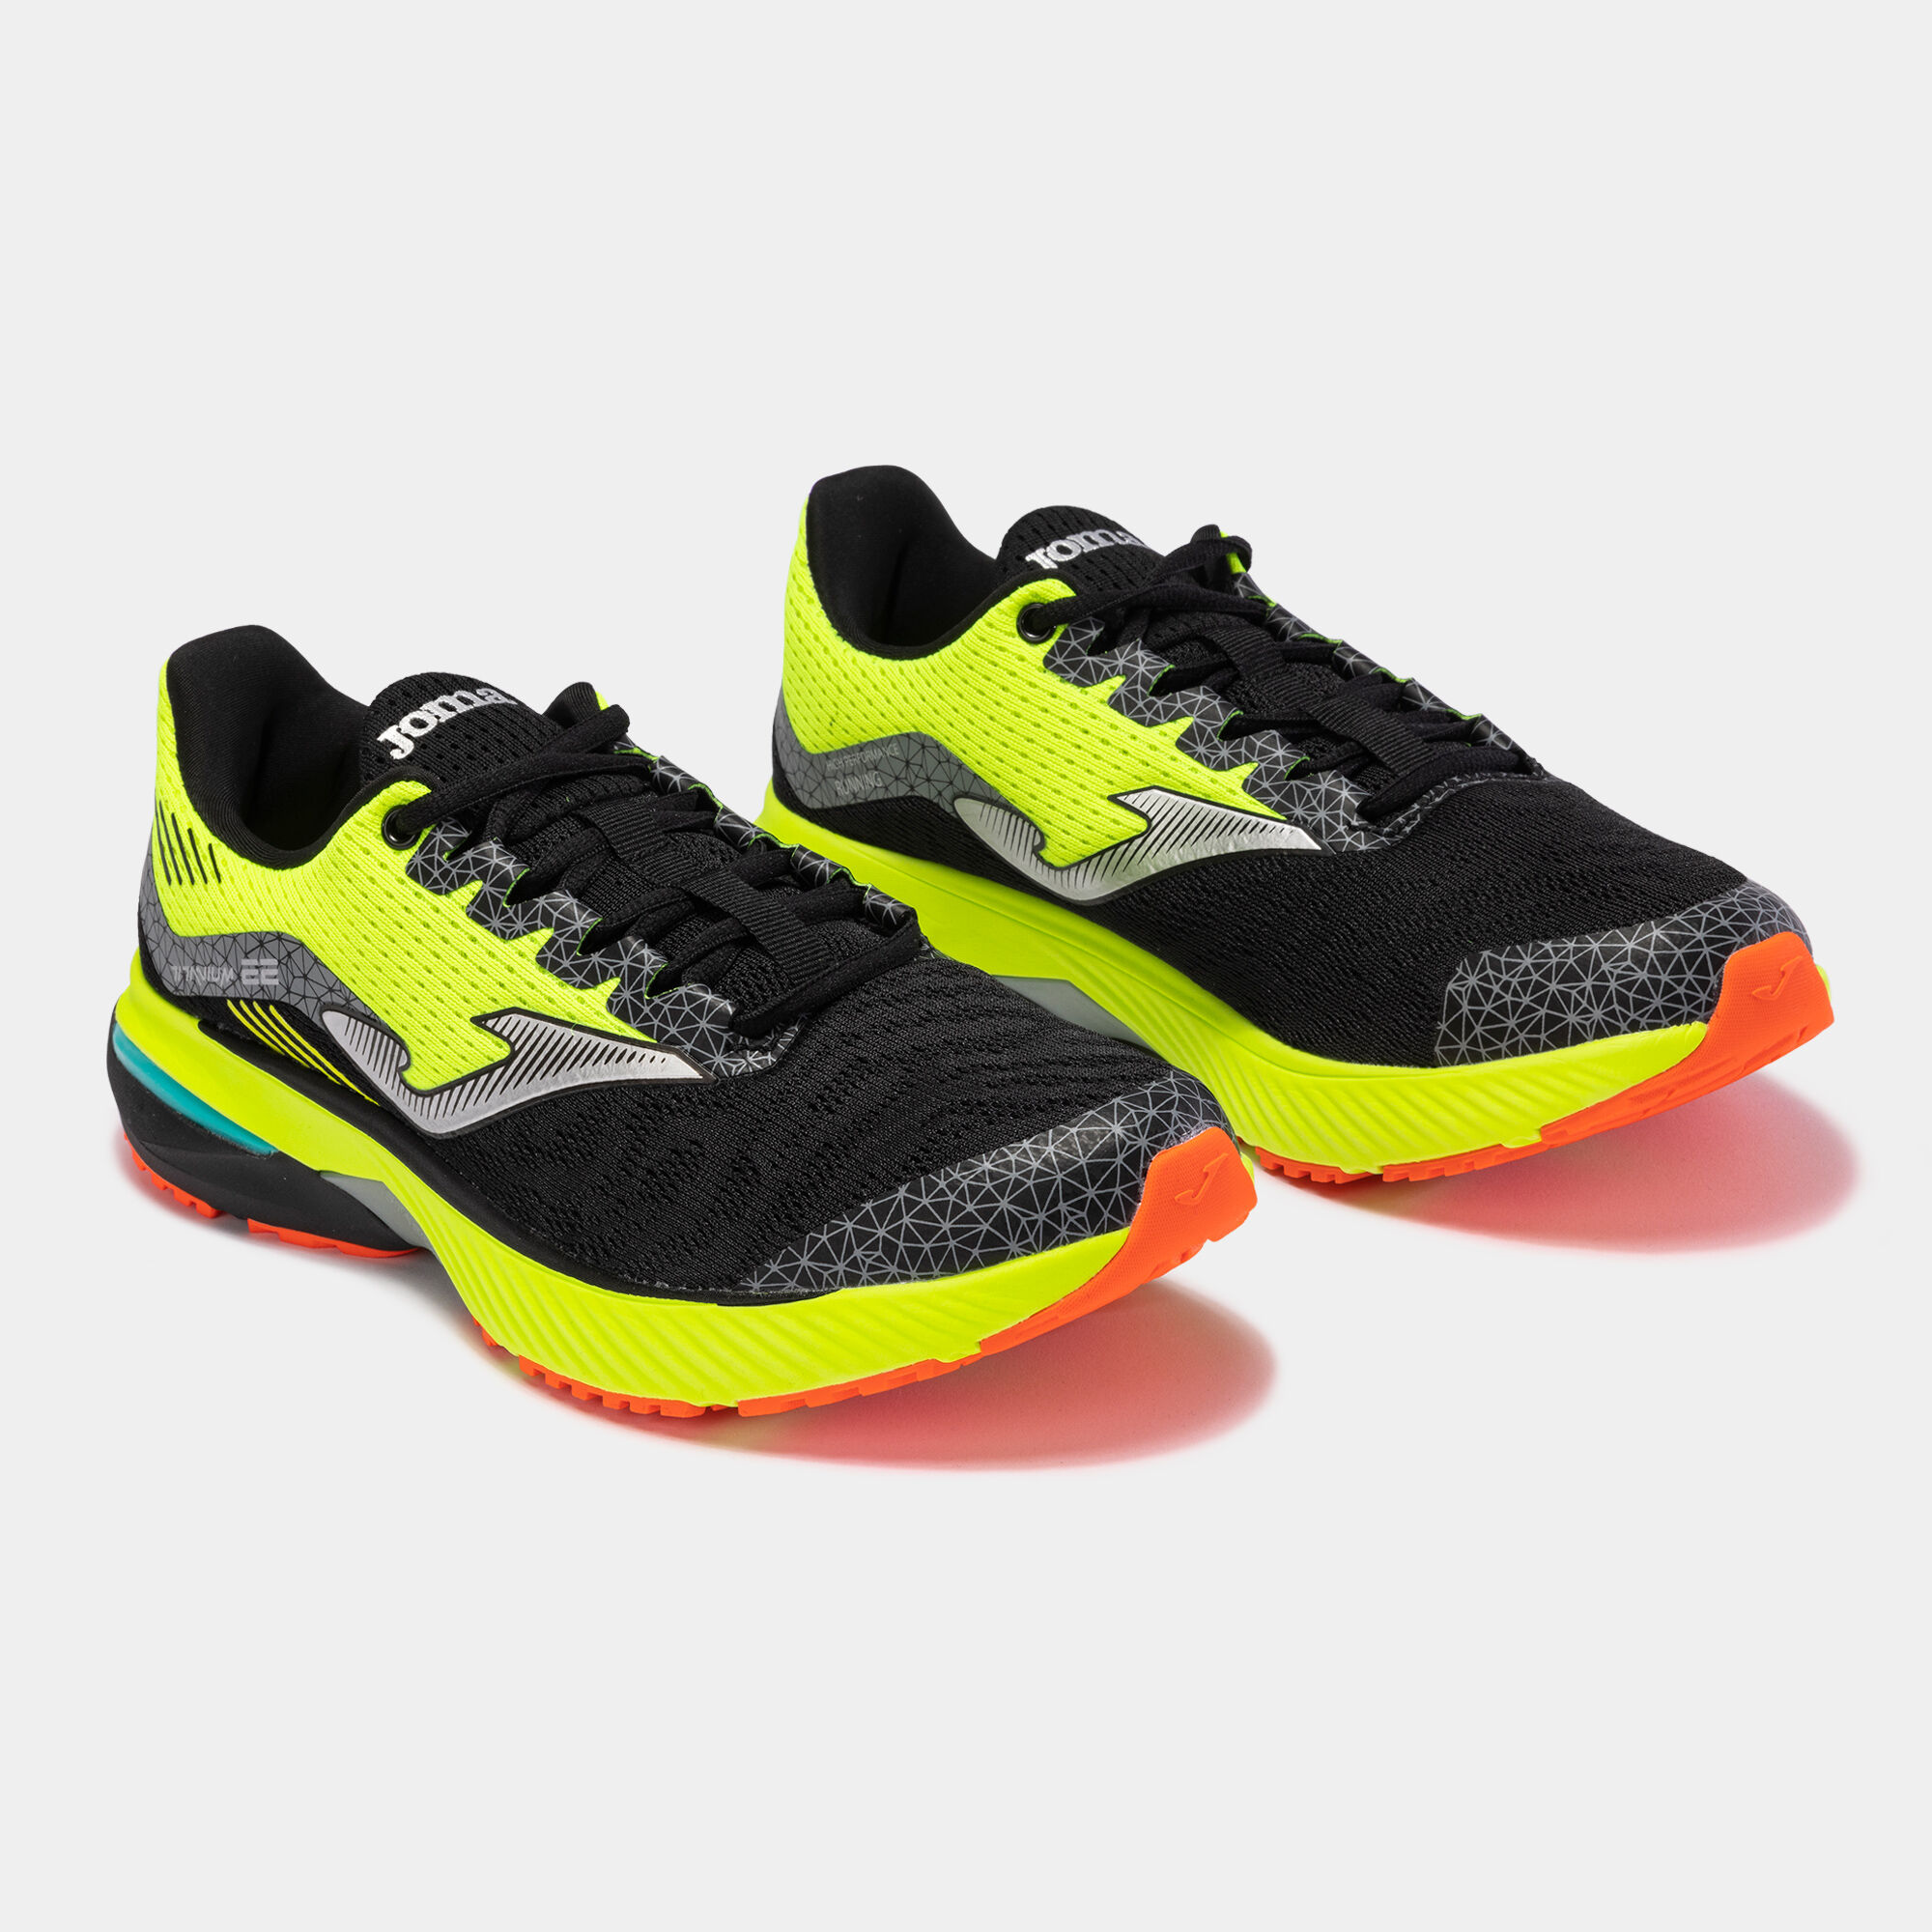 Pantofi sport alergare Titanium Men 23 bărbaȚi negru galben fosforescent